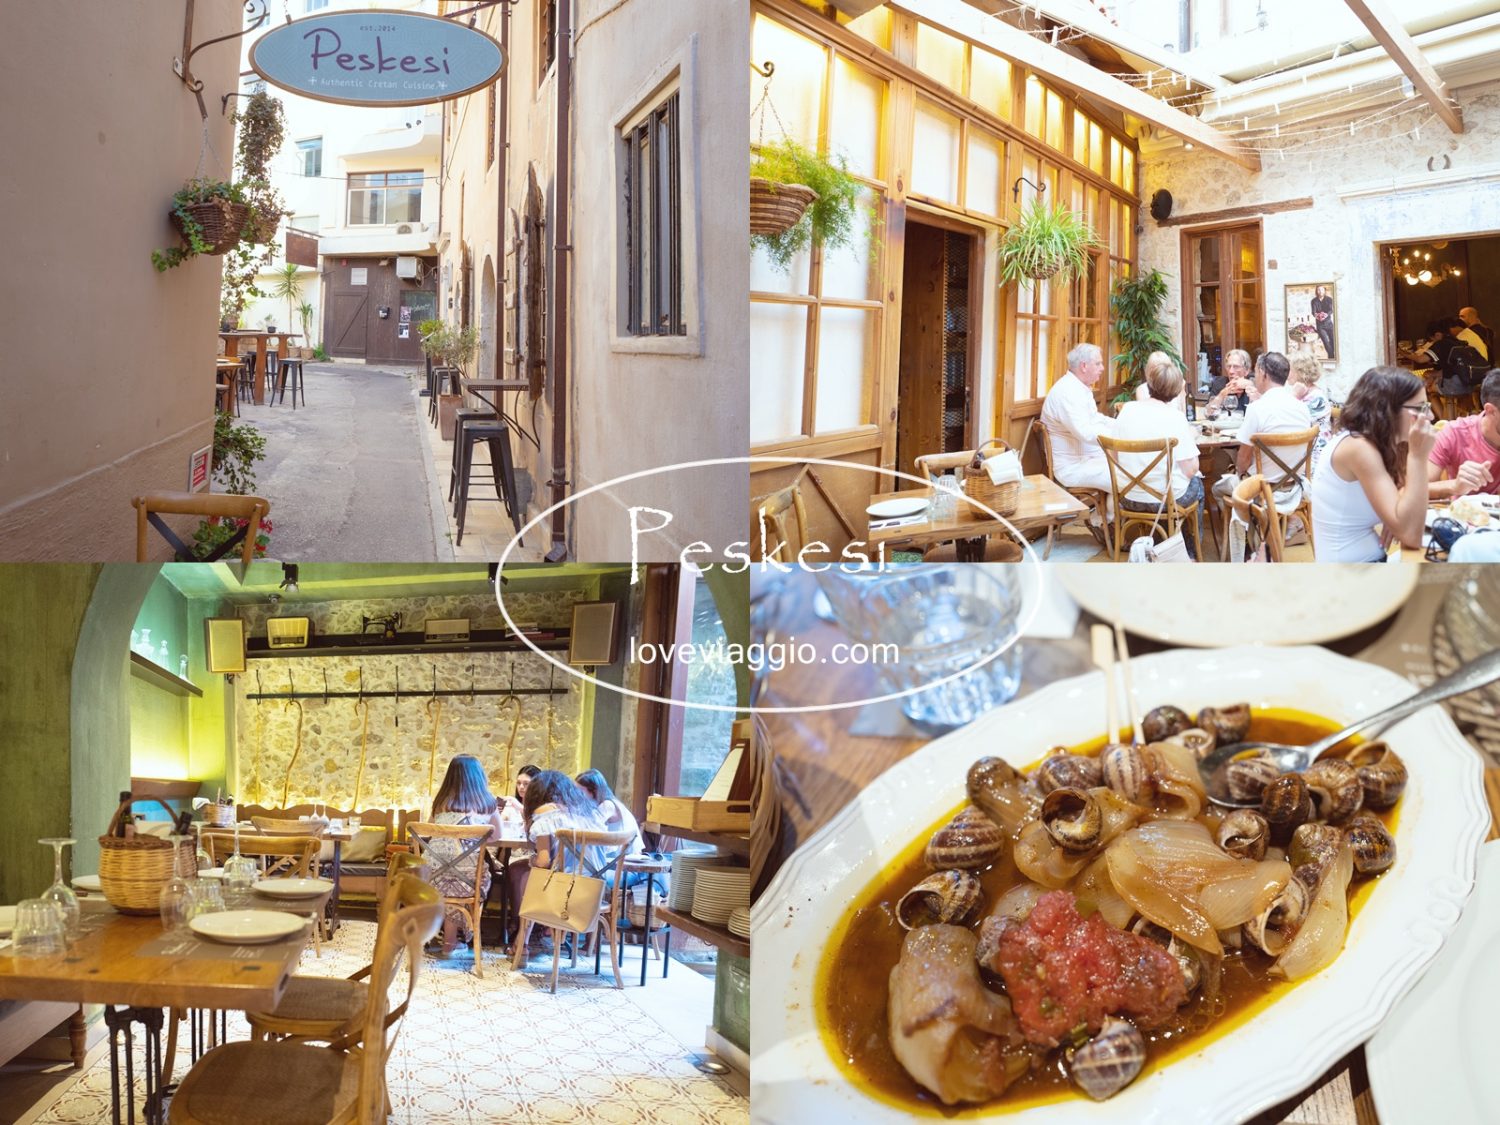 crete,Peskesi,伊拉克里翁,克里特島,克里特島傳統料理,希臘美食 @薇樂莉 - 旅行.生活.攝影